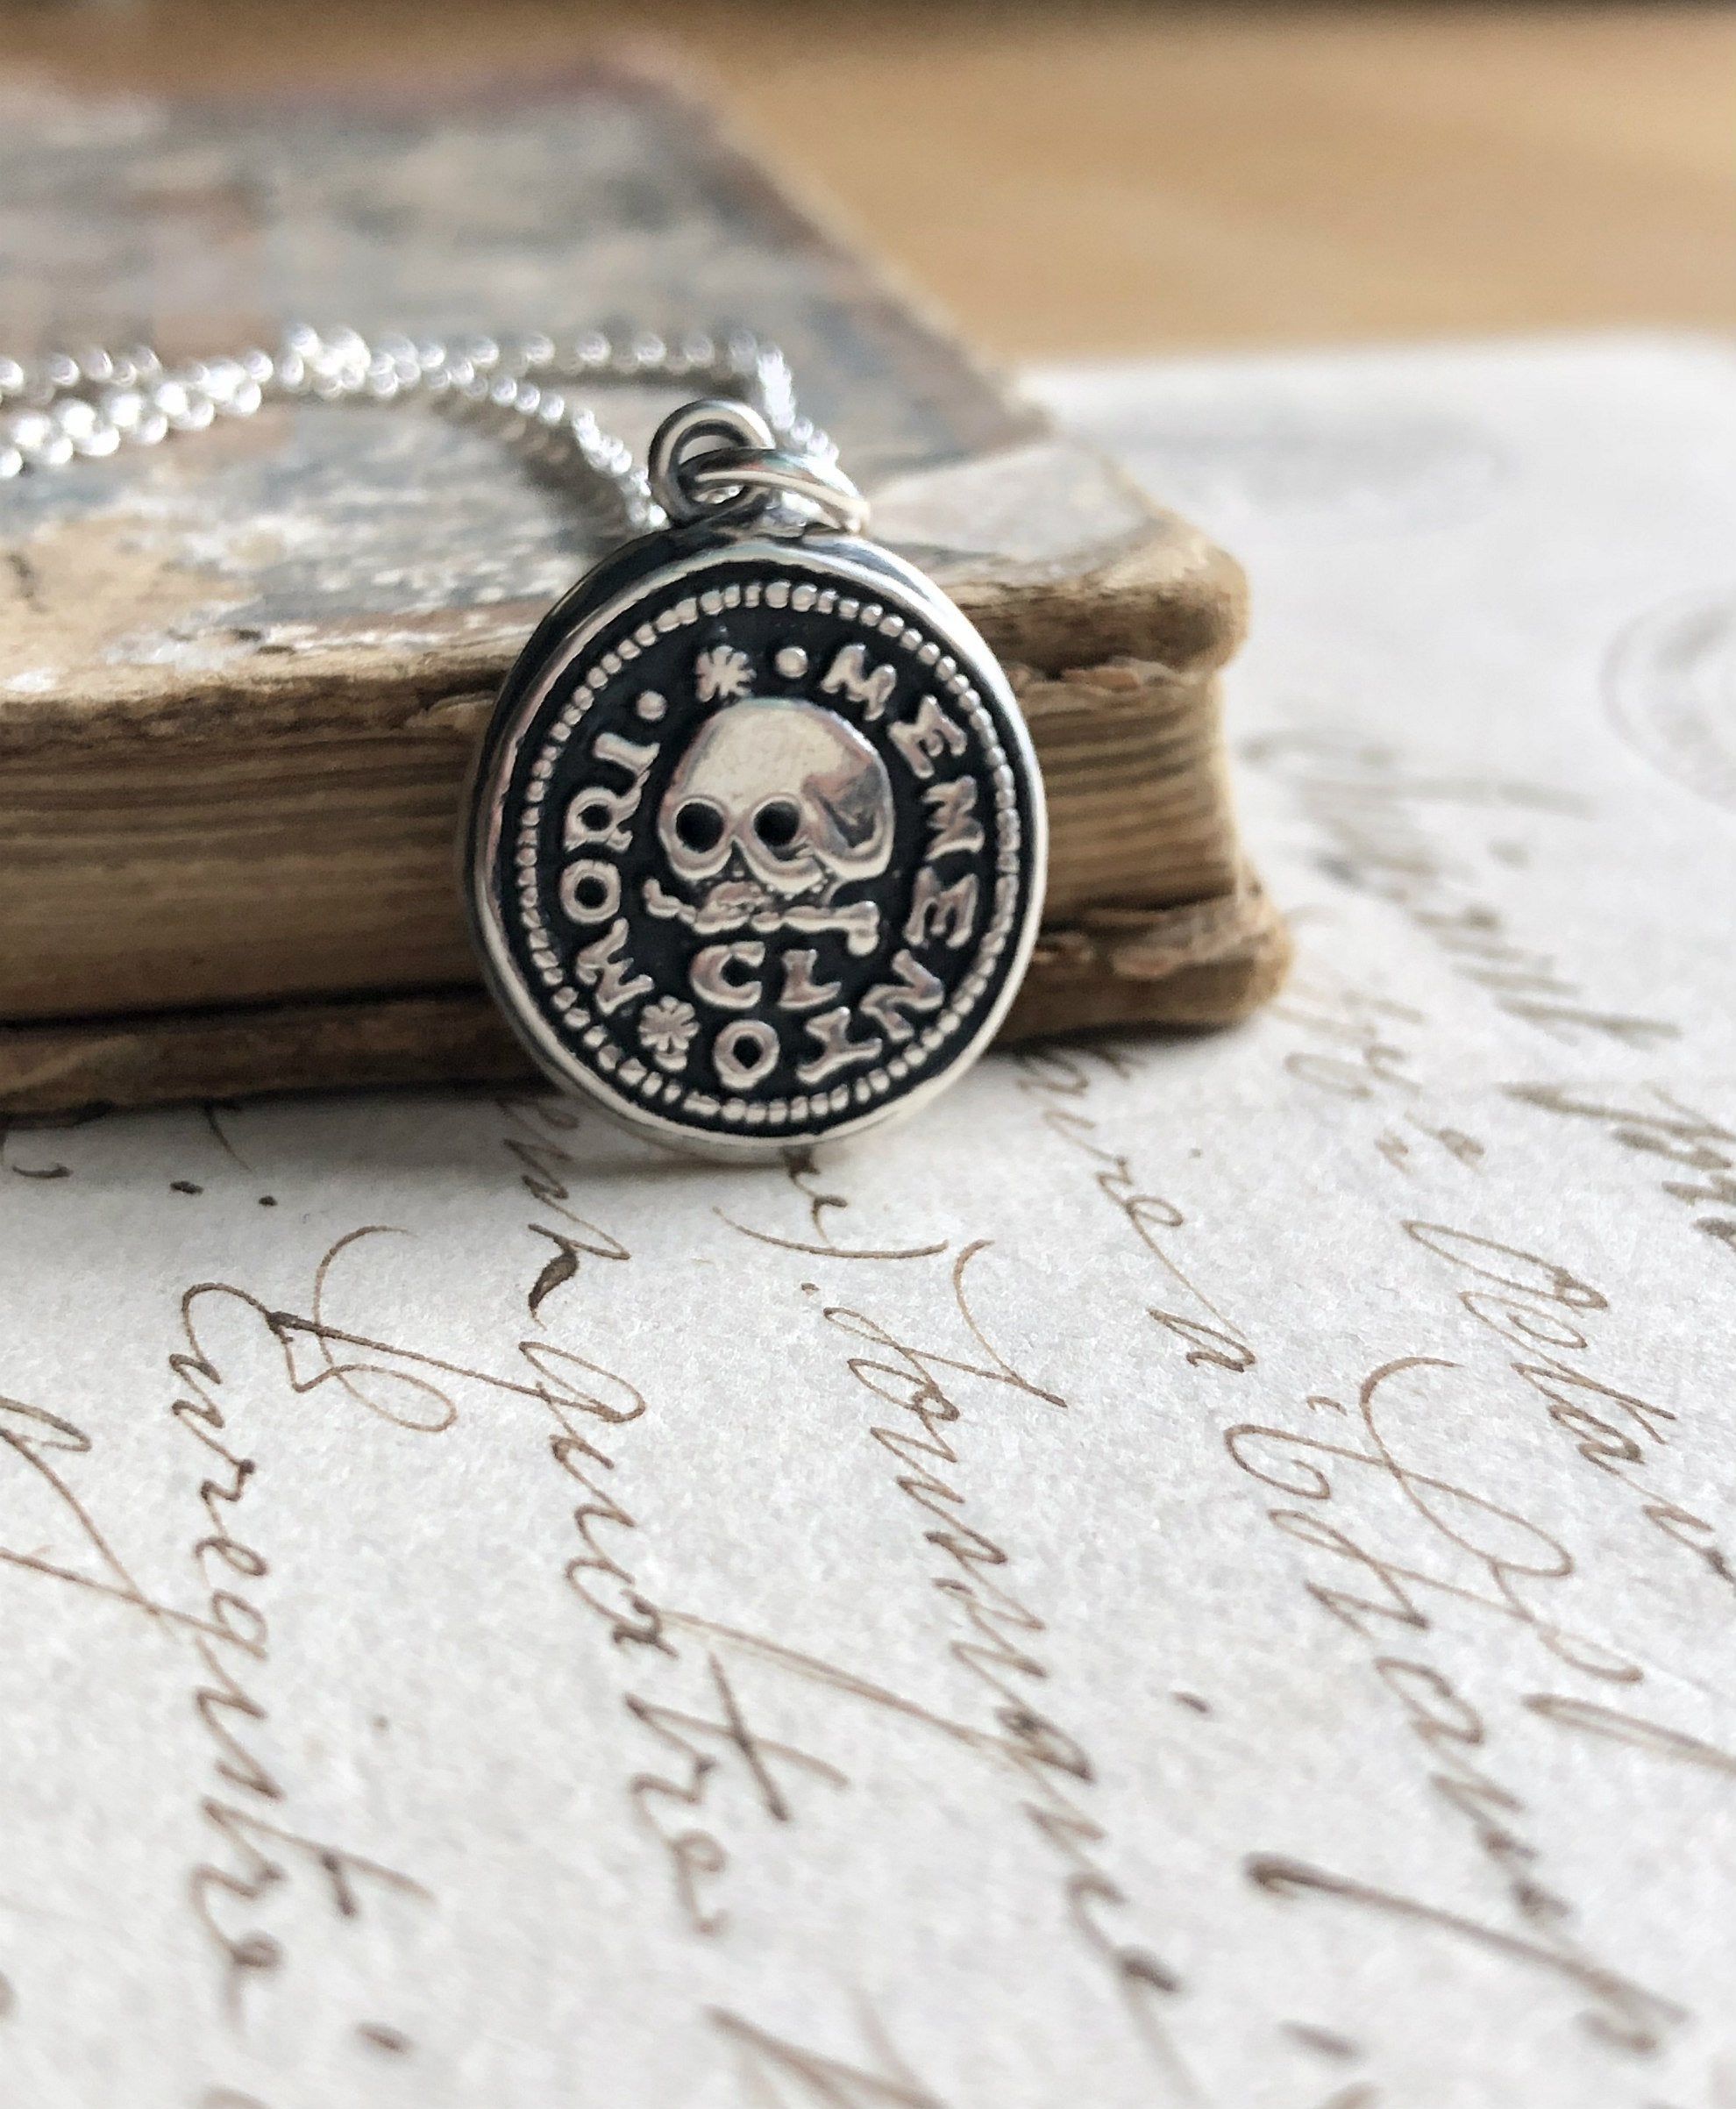 Skull Memento Mori Wax Seal Necklace - Remember Your Mortality